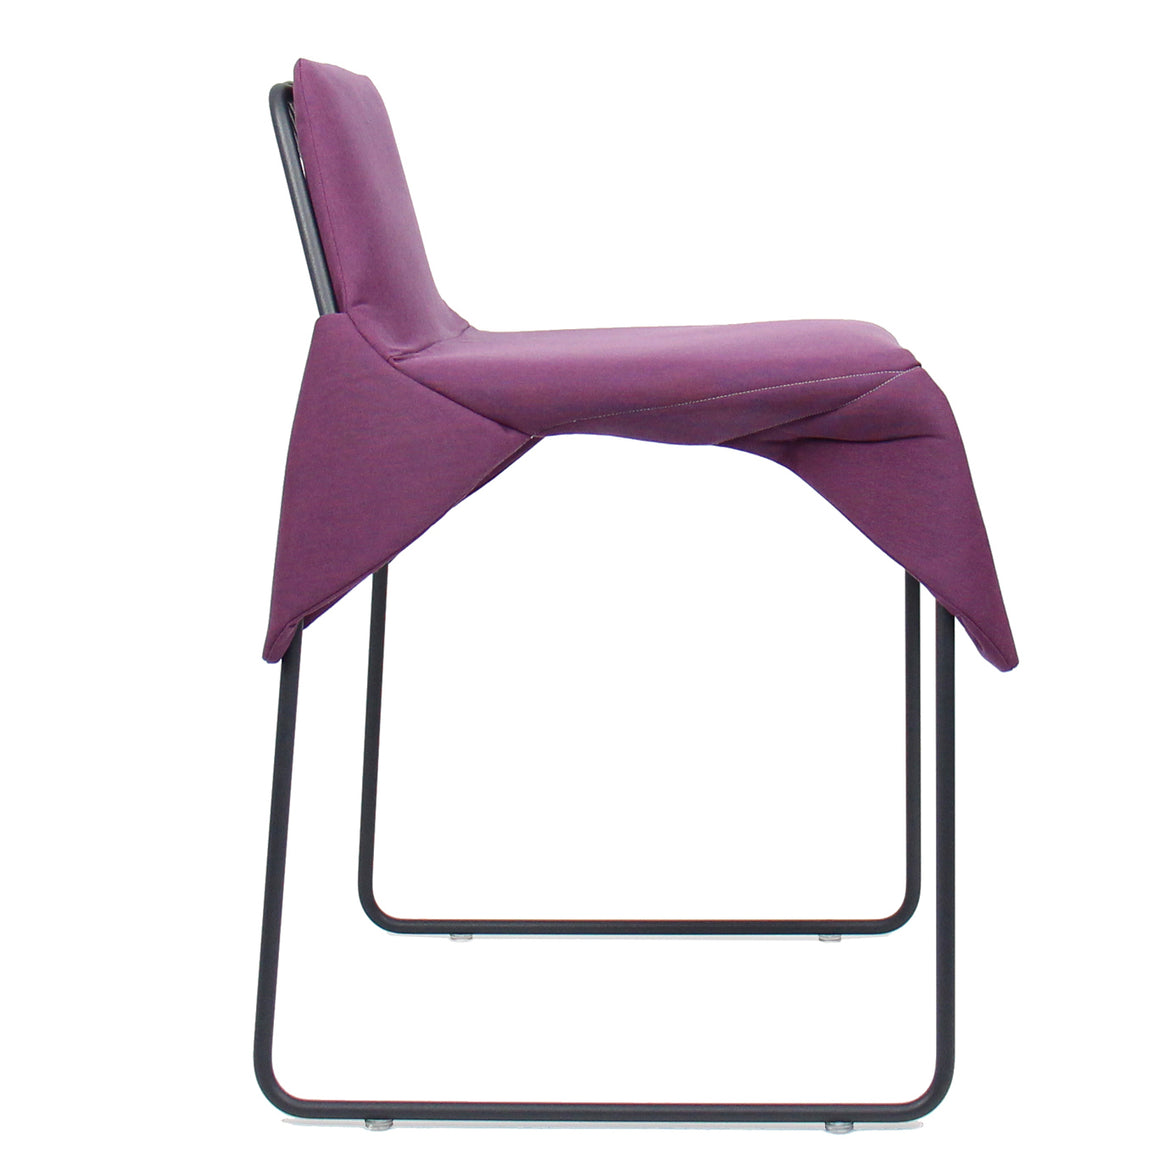 merkled net wrap chair 